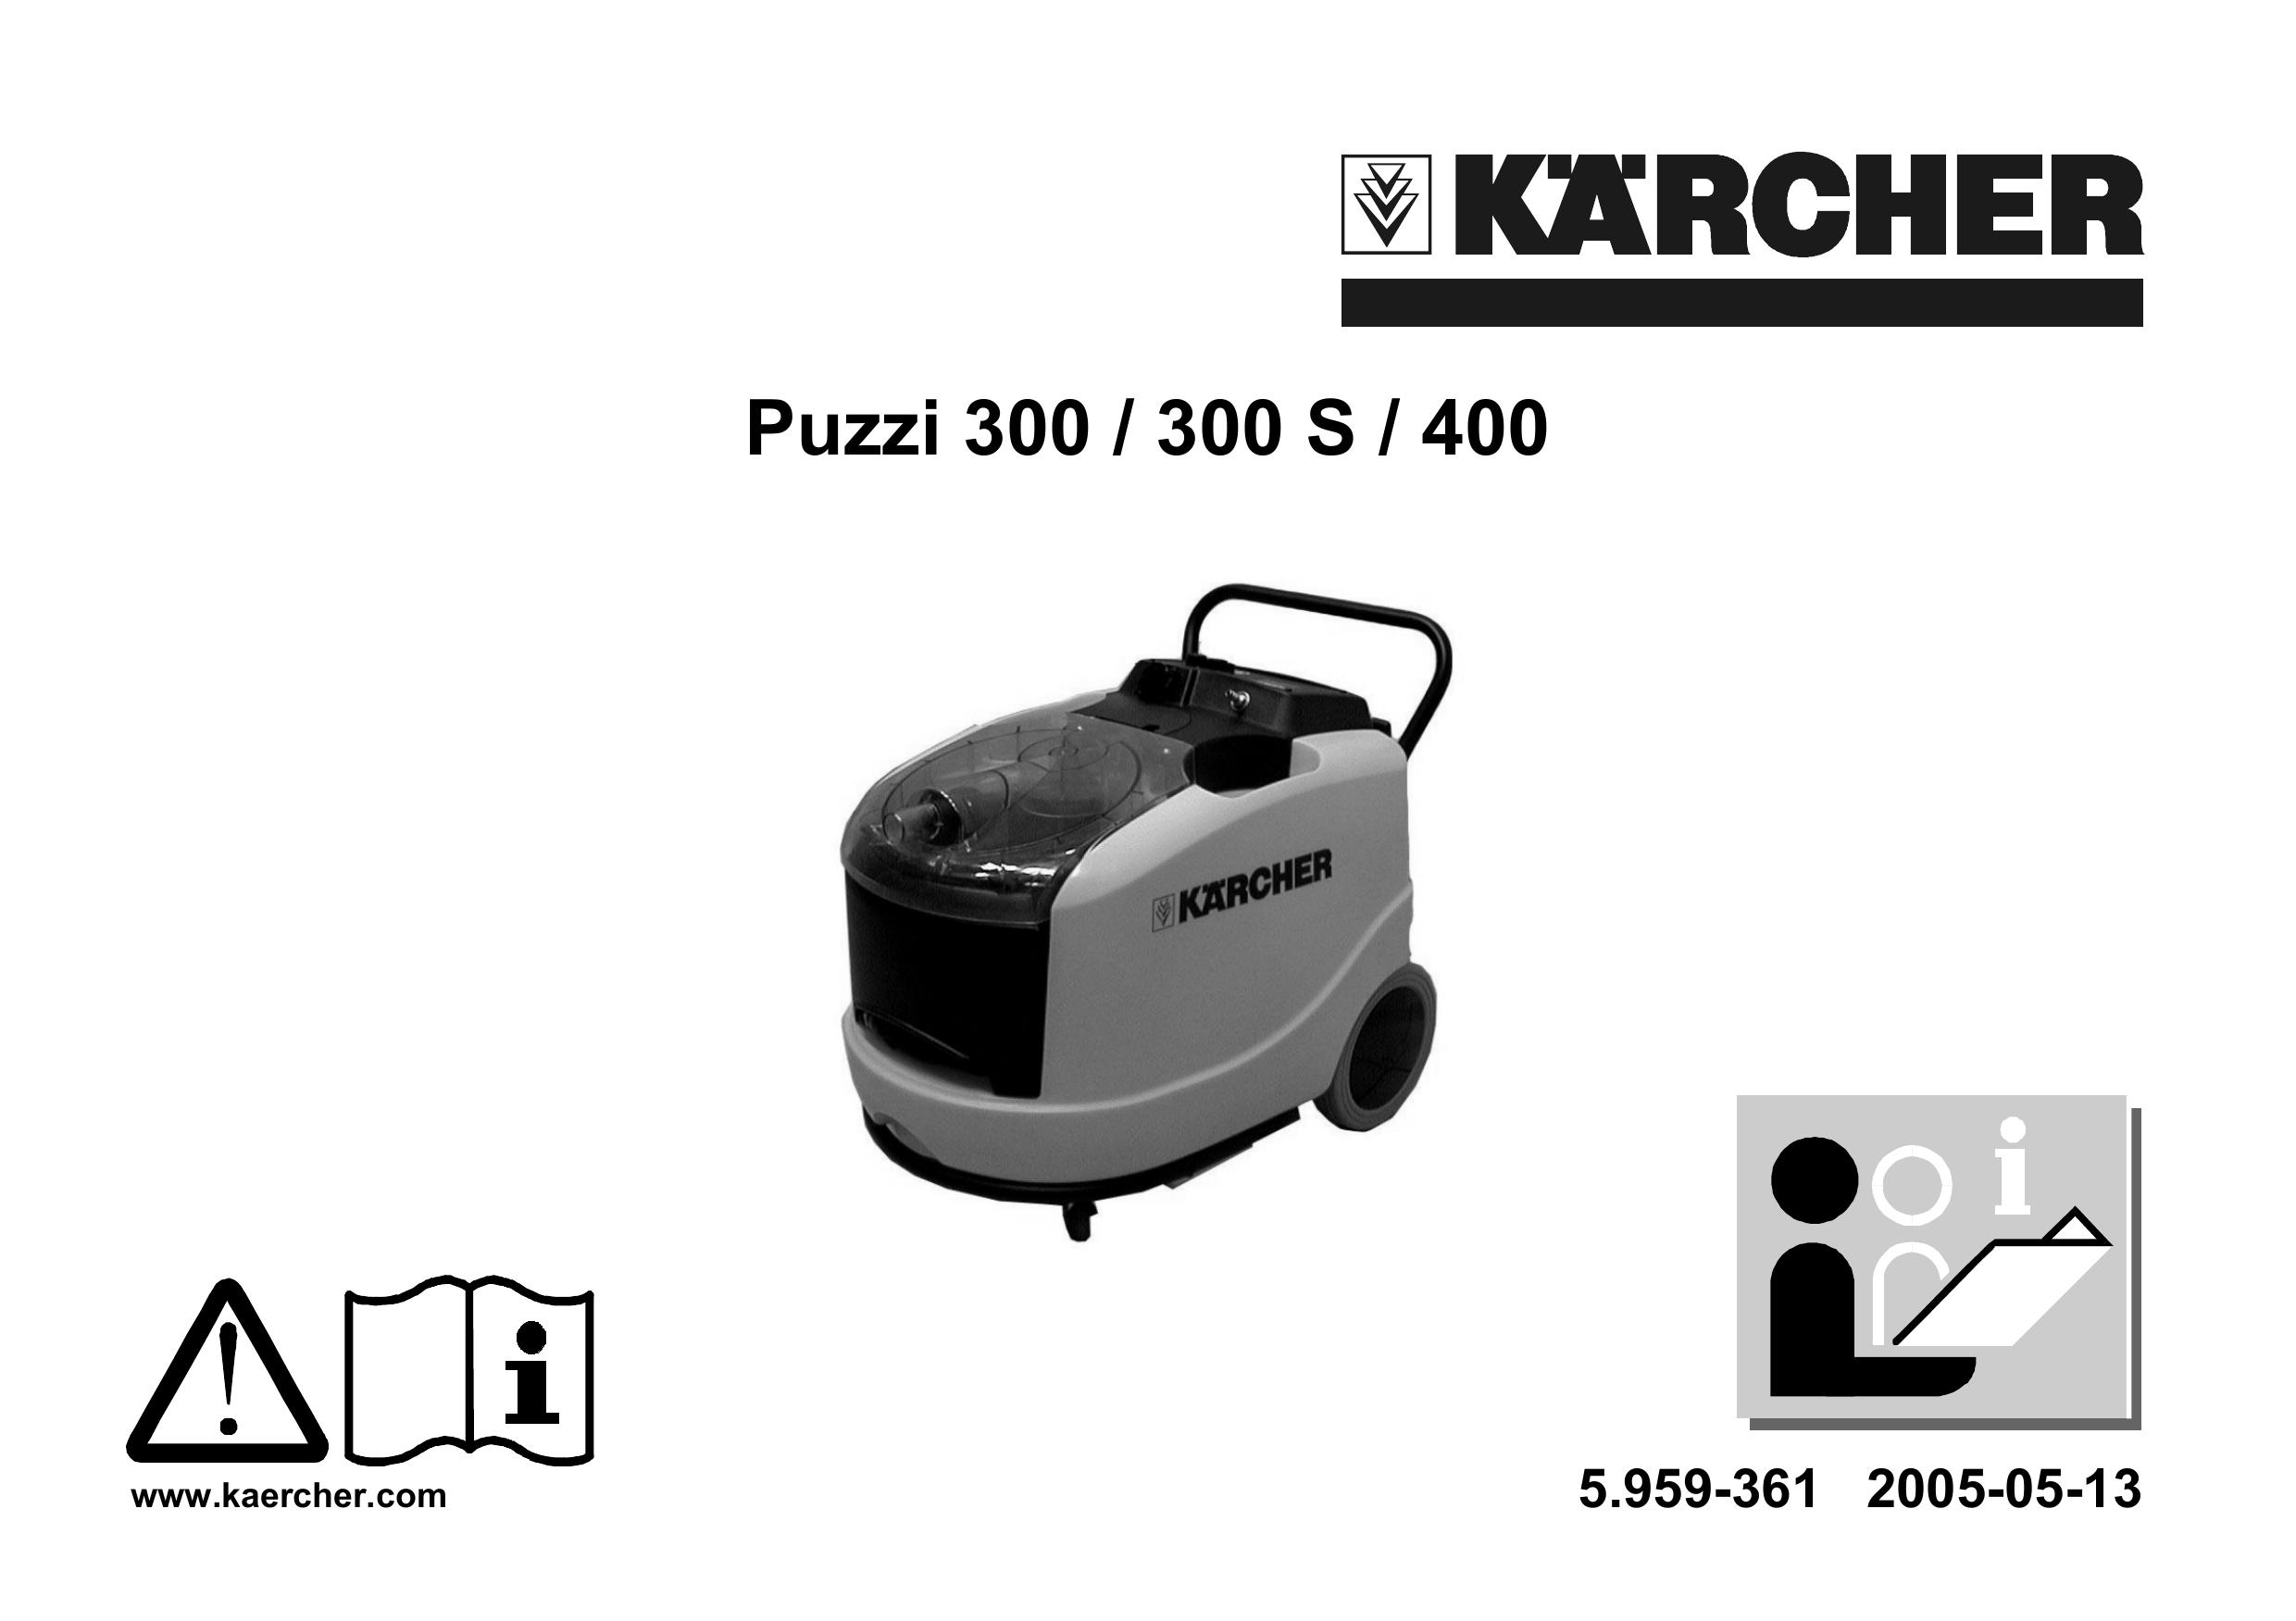 Karcher 300 S Pressure Washer User Manual